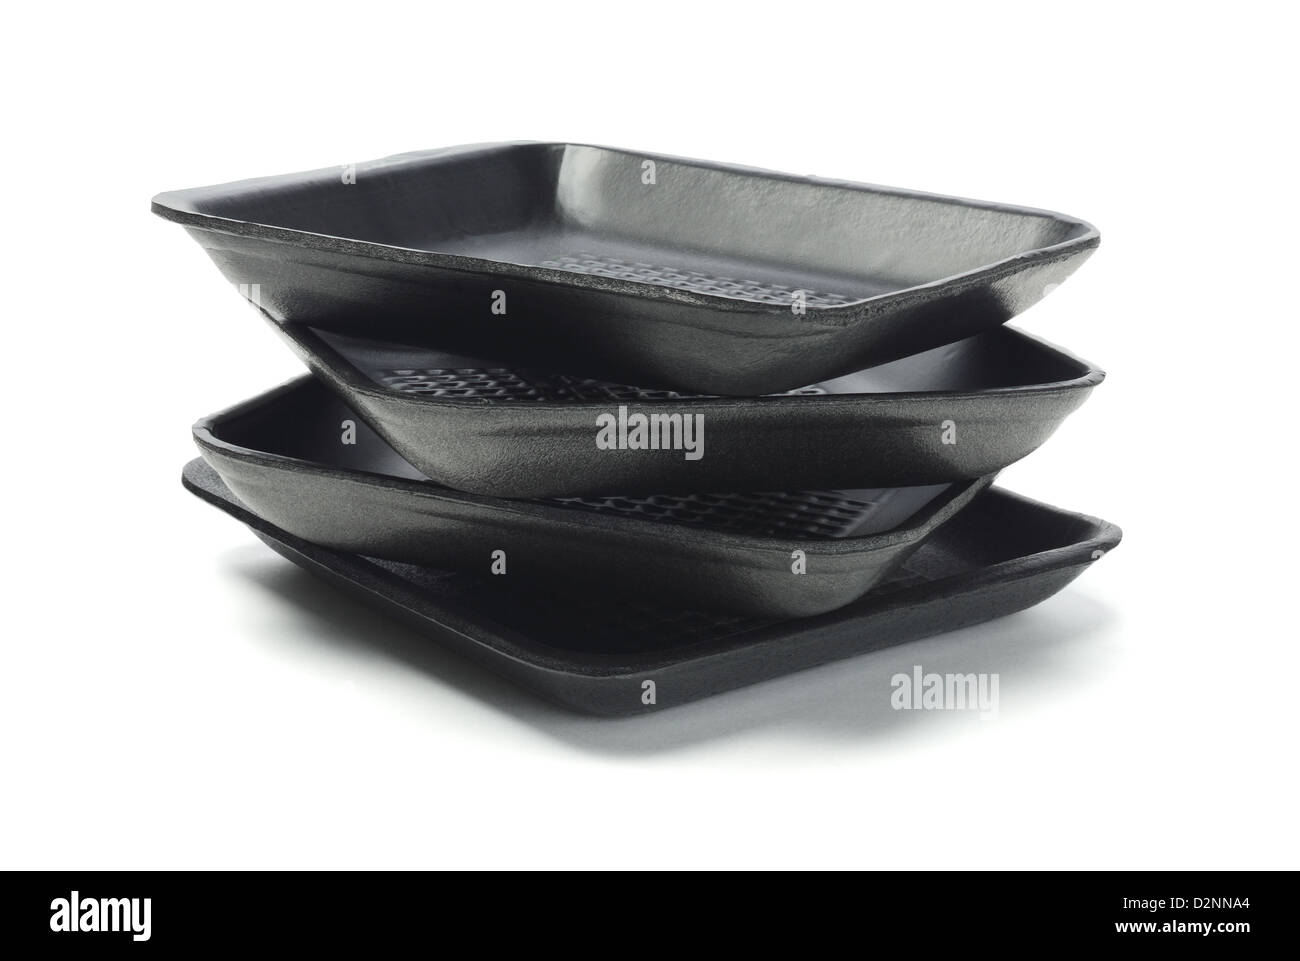 https://c8.alamy.com/comp/D2NNA4/stack-of-disposable-black-styrofoam-trays-on-white-background-D2NNA4.jpg